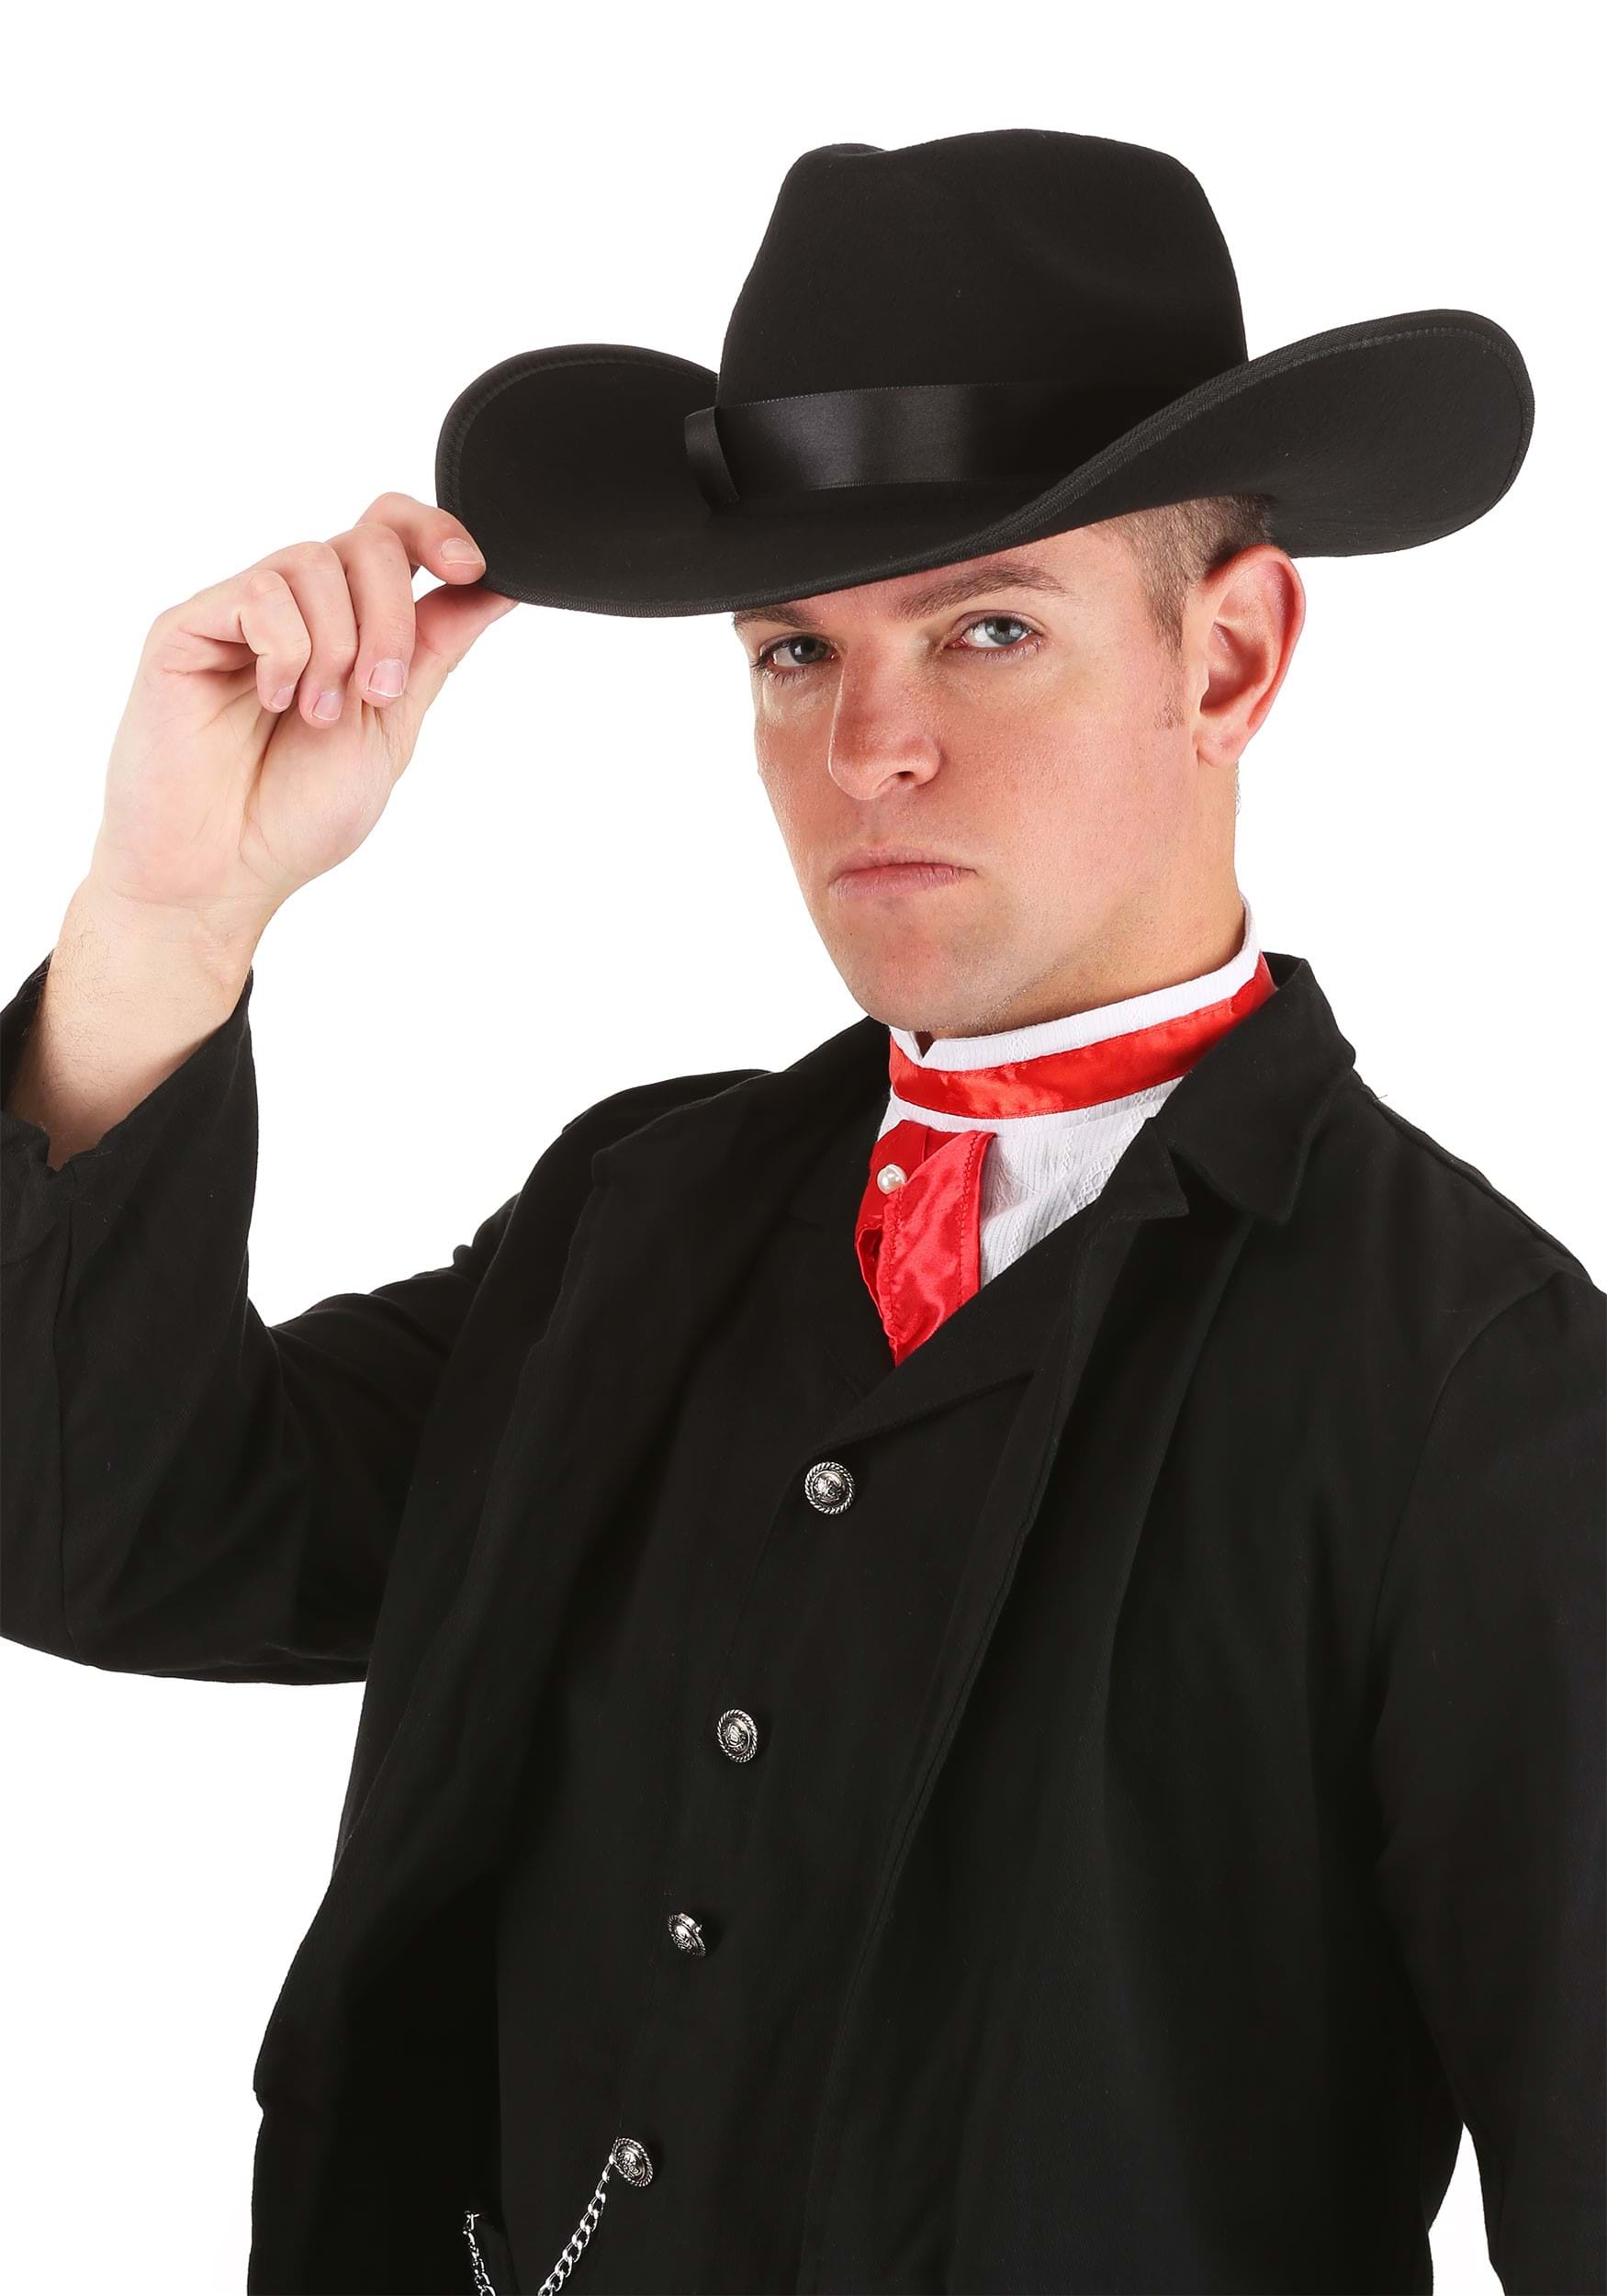 Black Western Cowboy Costume Hat